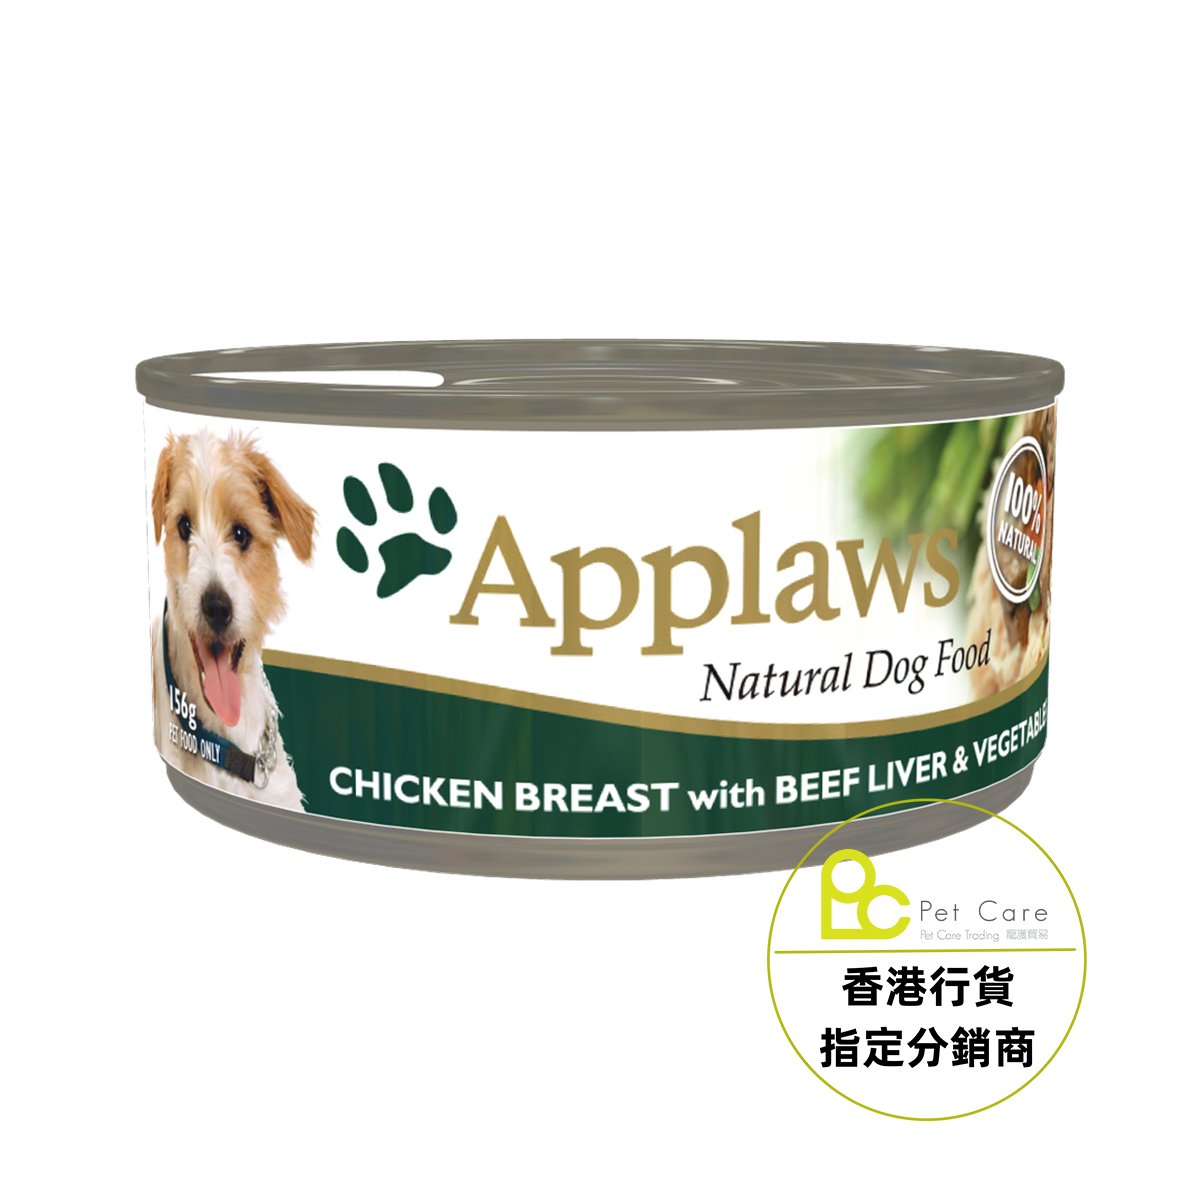 Applaws Dog 全天然 狗罐頭 - 牛肝 雞柳 蔬菜 156g